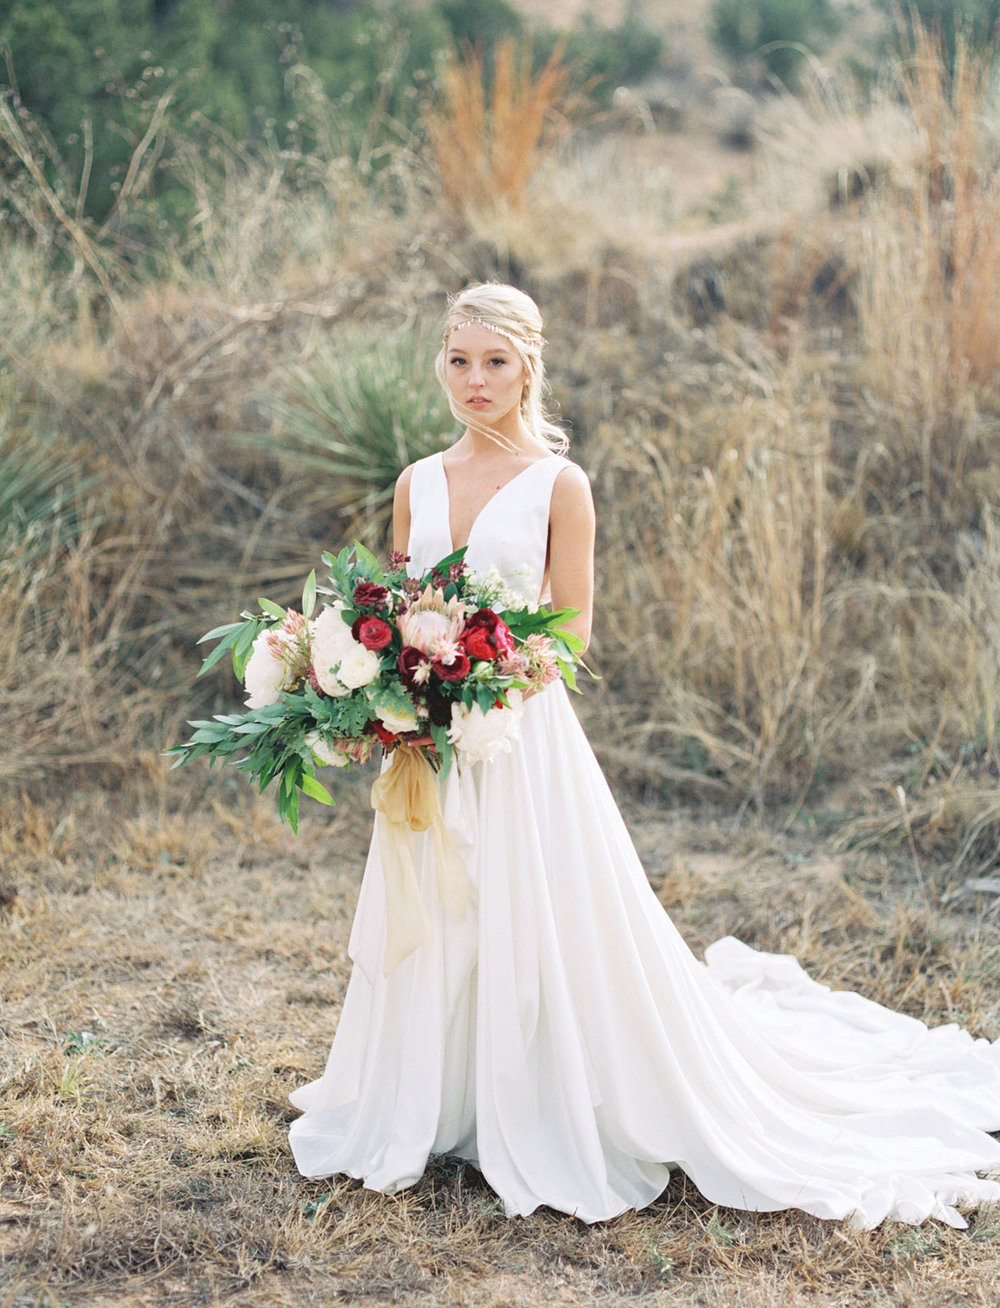 Real Weddings: Meet Deidre — Carol Hannah